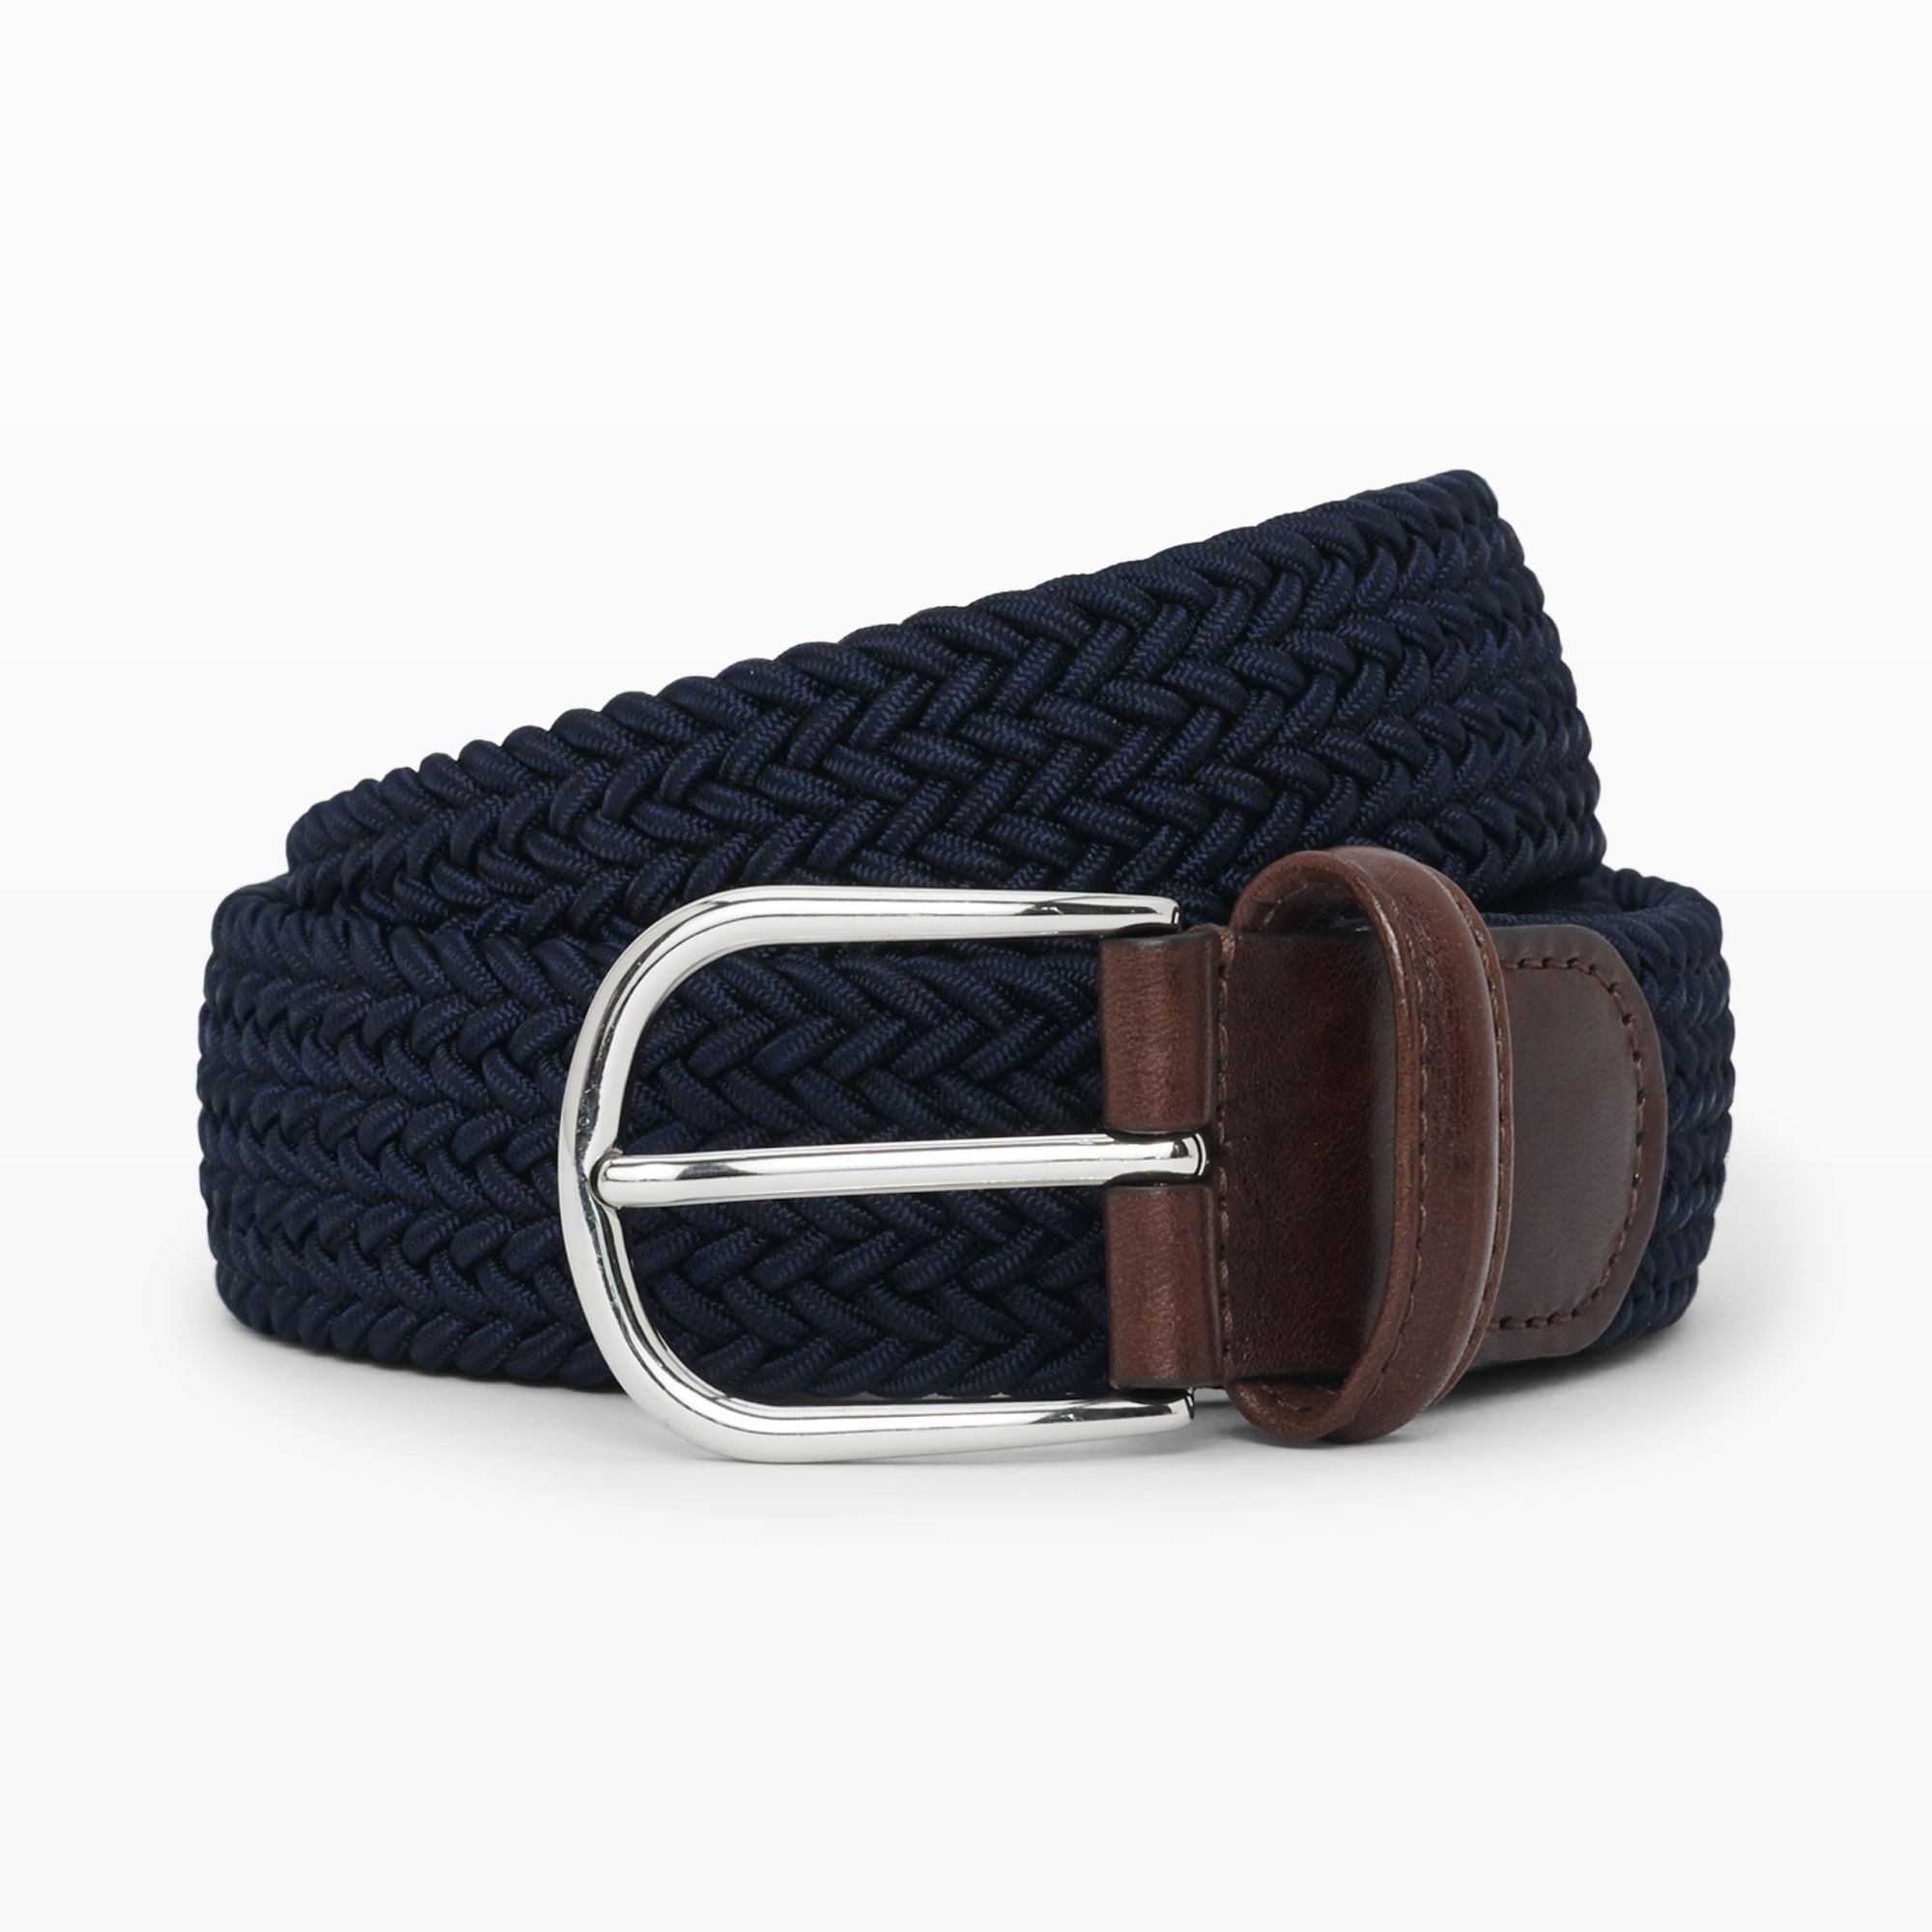 Lyst - Andersons Woven Belt in Blue for Men